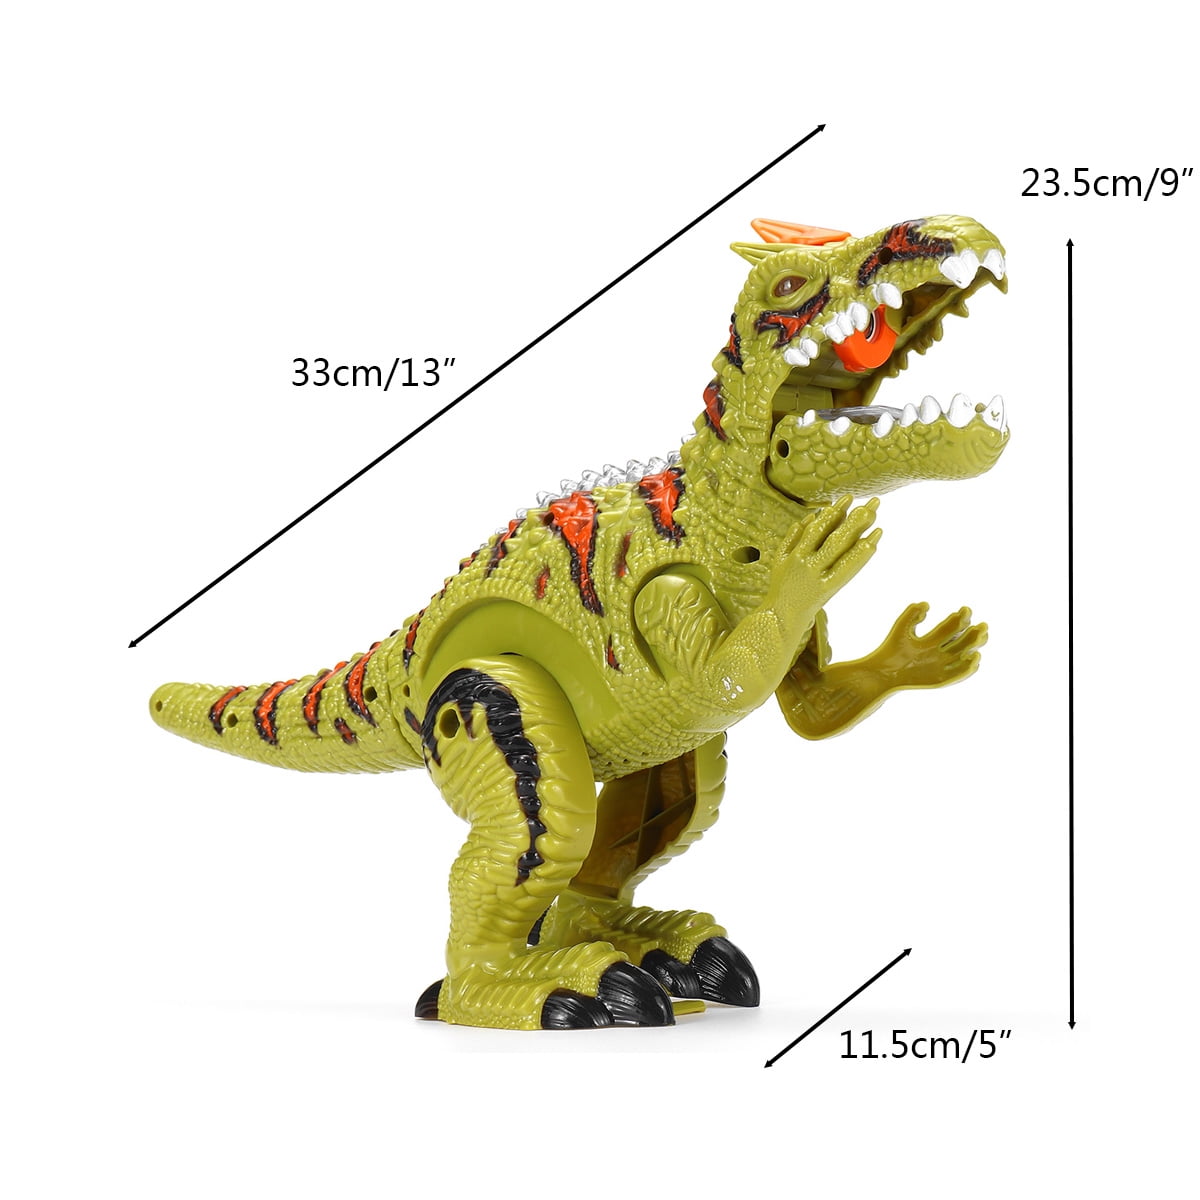 Electric Kids Children Walking Dinosaur T-Rex Figure Toys With Light Sound XMAS